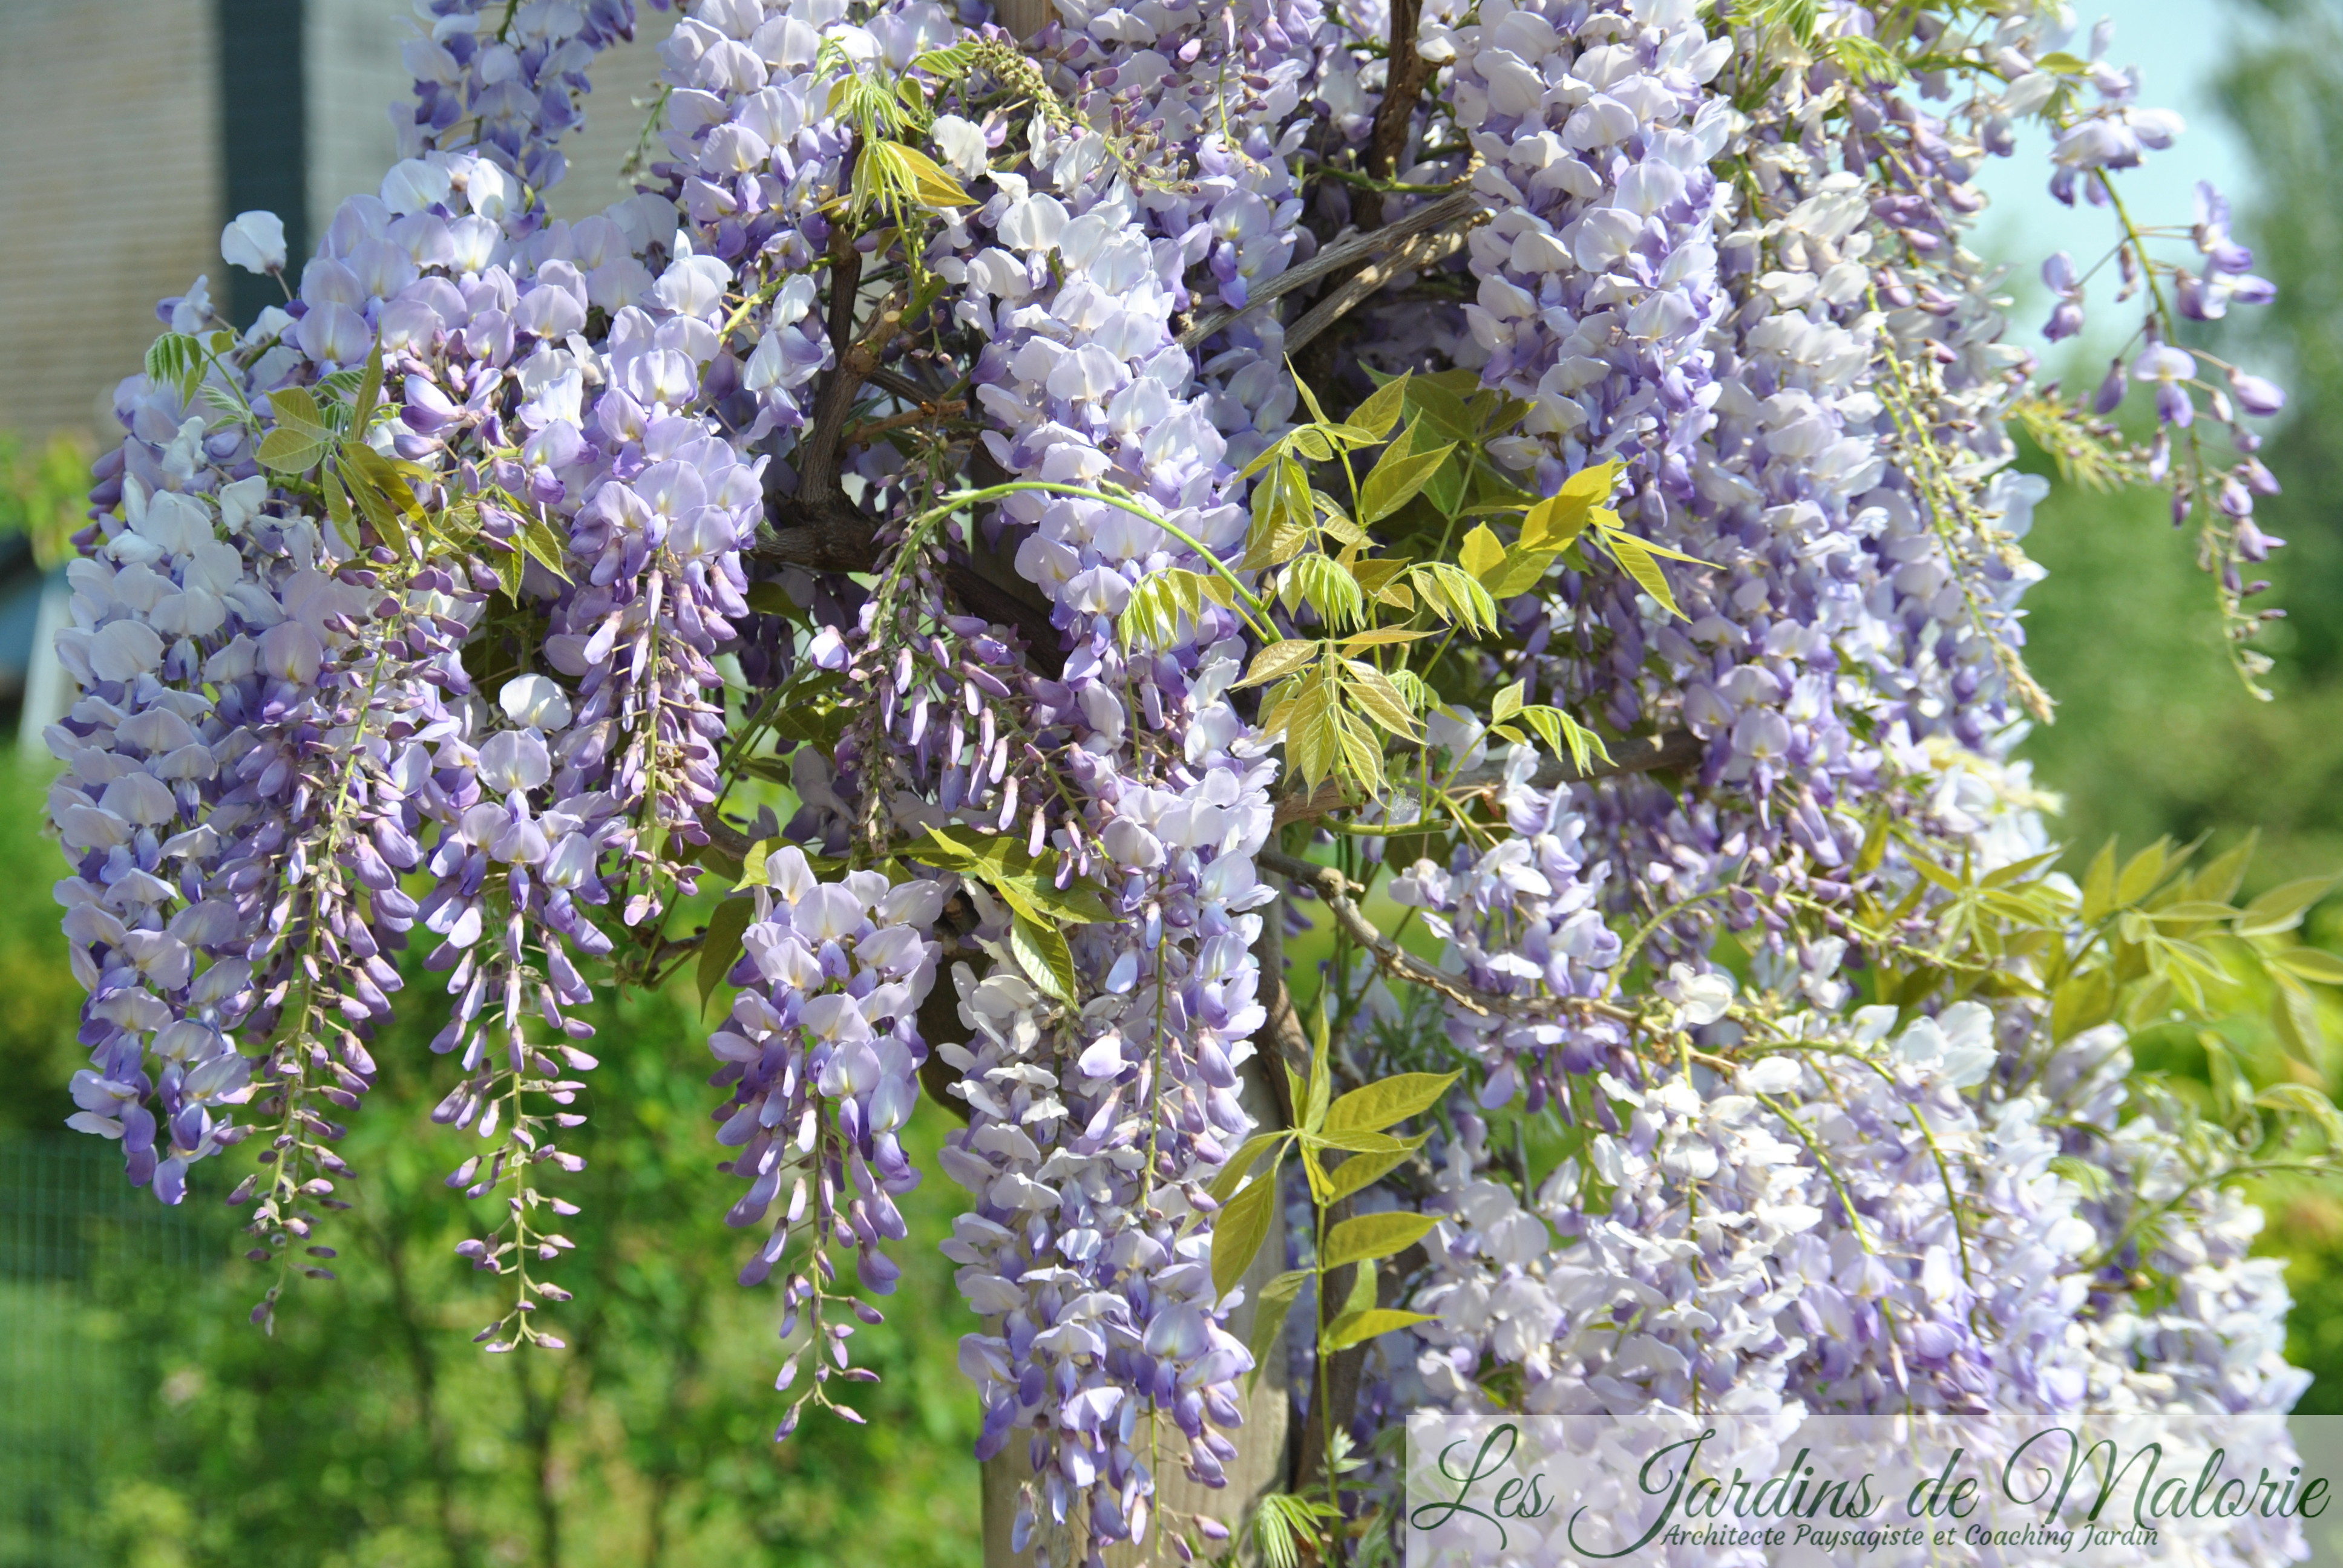 La glycine (wisteria) : plantation, taille, bouture, culture en pot